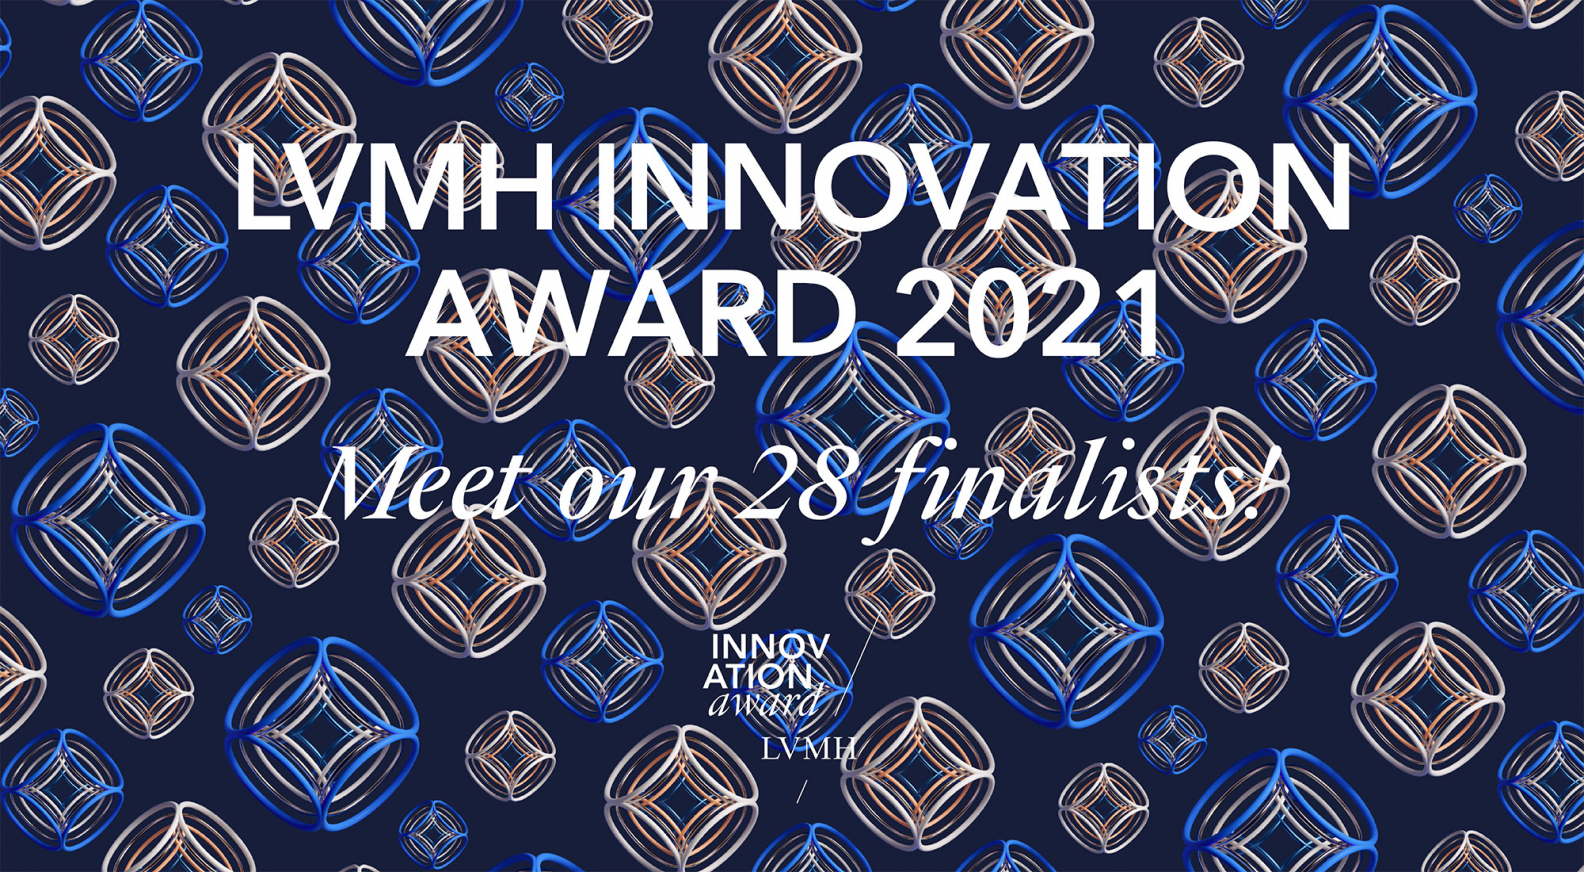 Trade Show and Award - LVMH Innovation Award Finalist at VIVA Technology  (Paris, France) — UPTERIOR